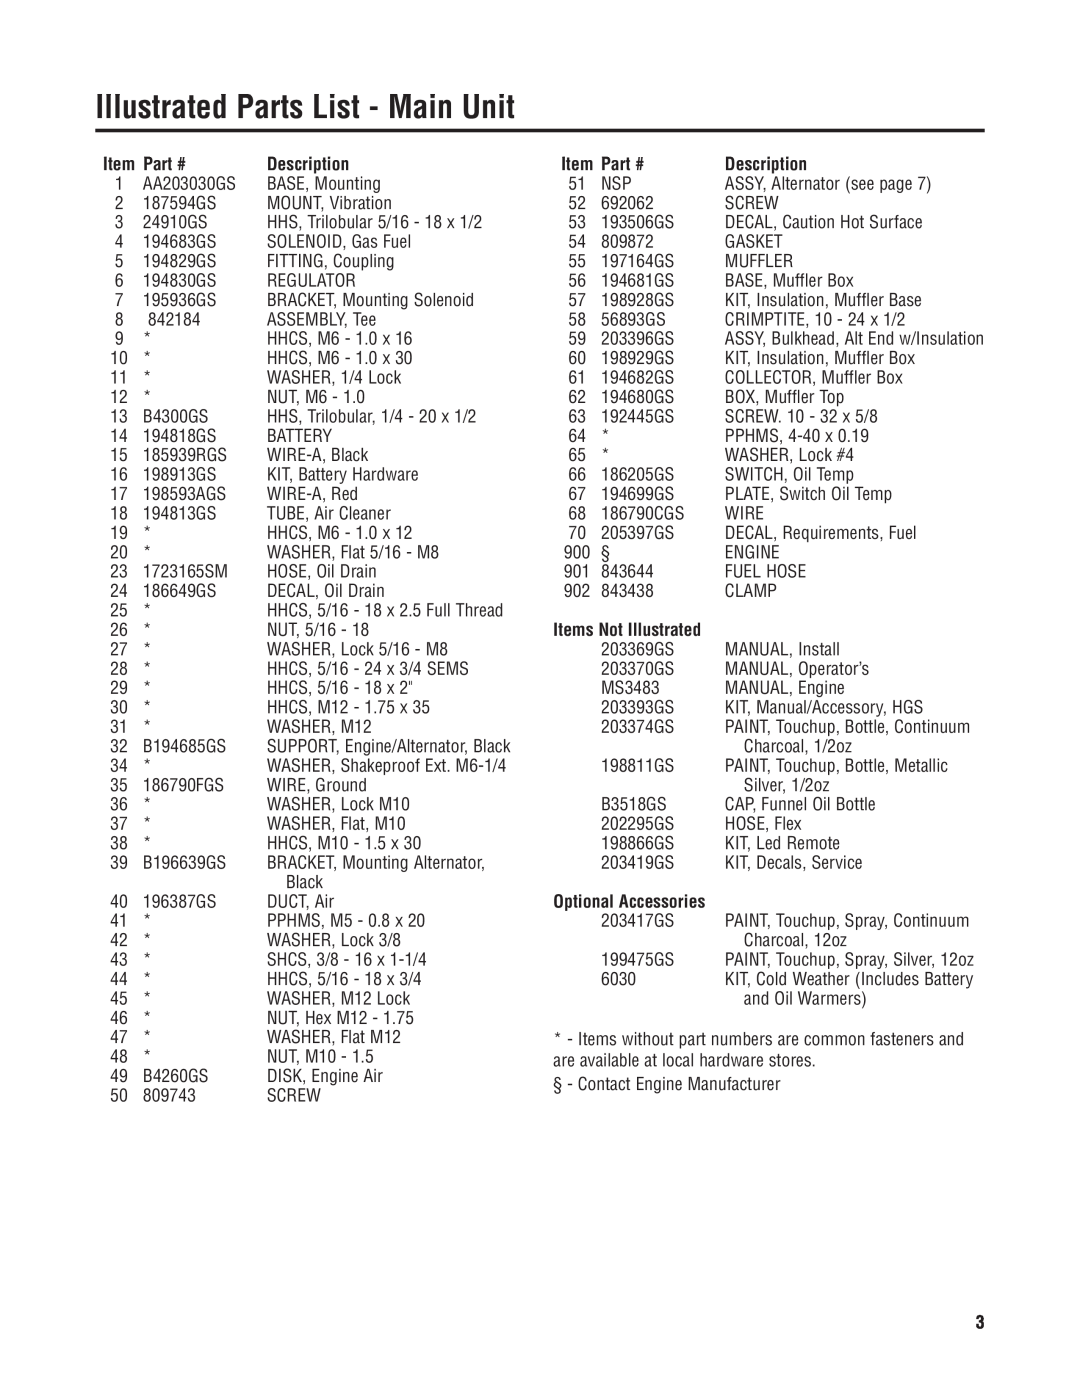 Briggs & Stratton 40275 manual Illustrated Parts List - Main Unit, Description, Items Not Illustrated 